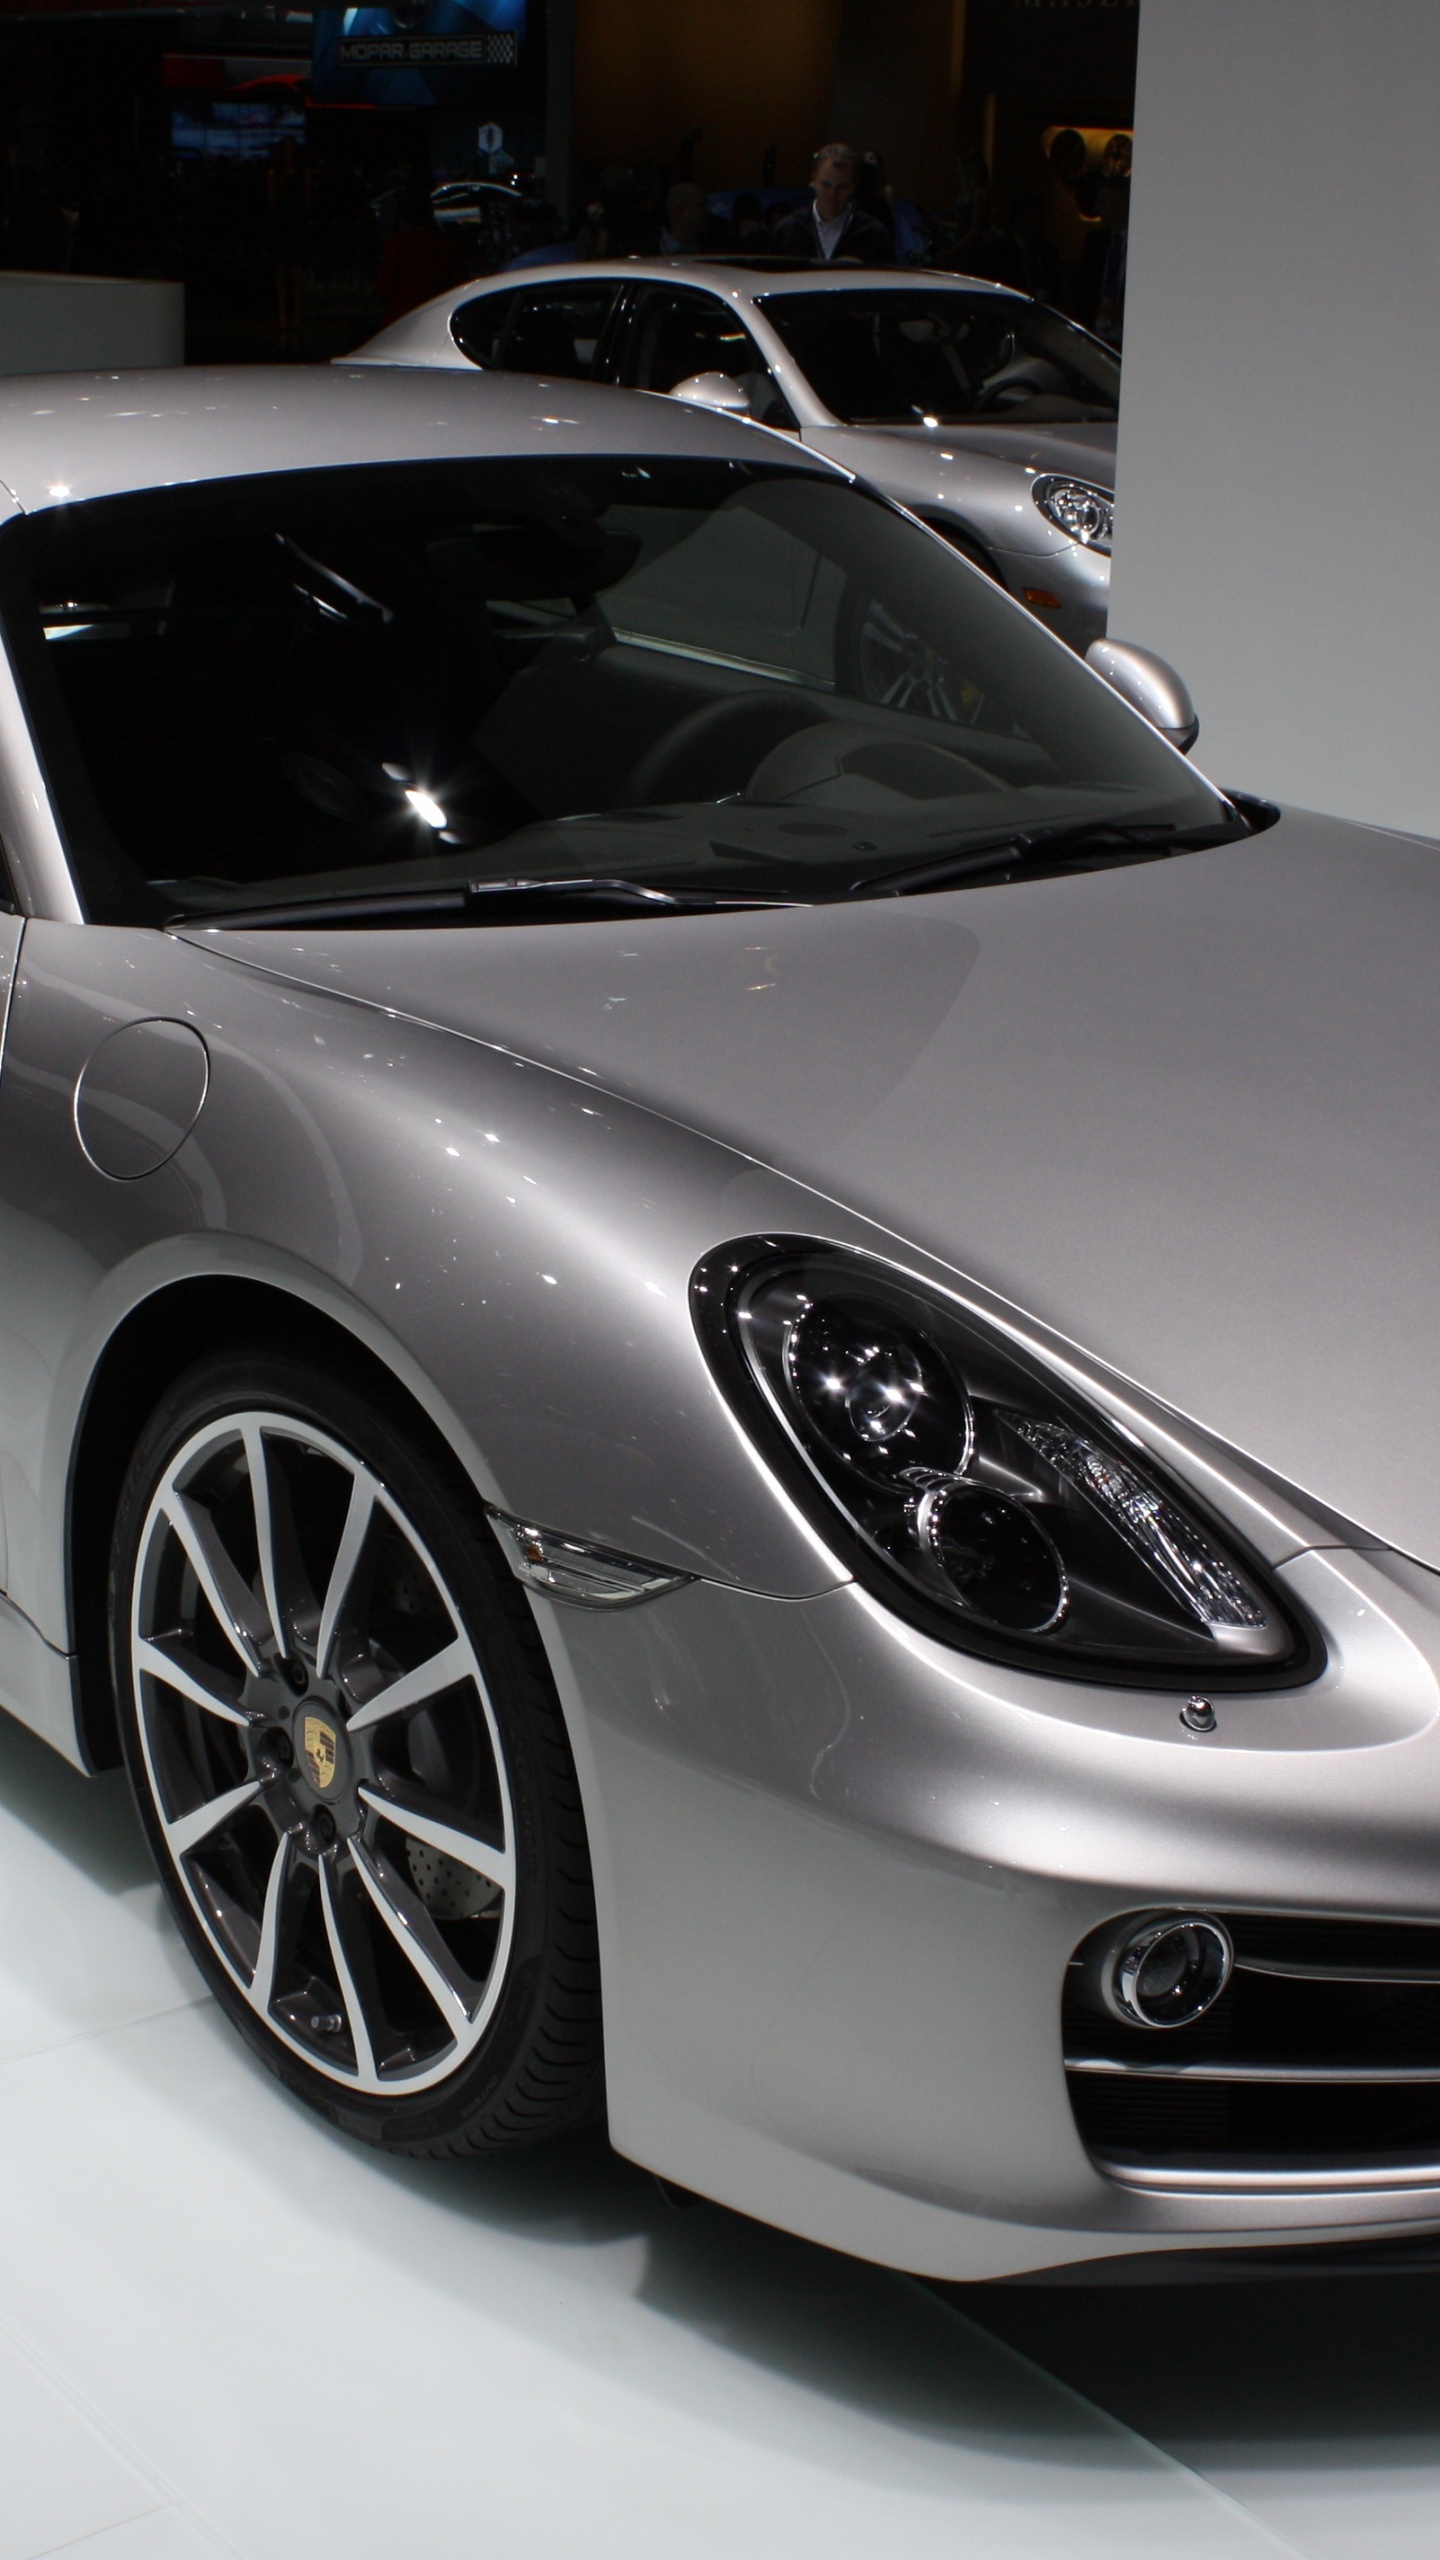 Silver Porsche 911 Parked in a Room. Wallpaper in 1440x2560 Resolution